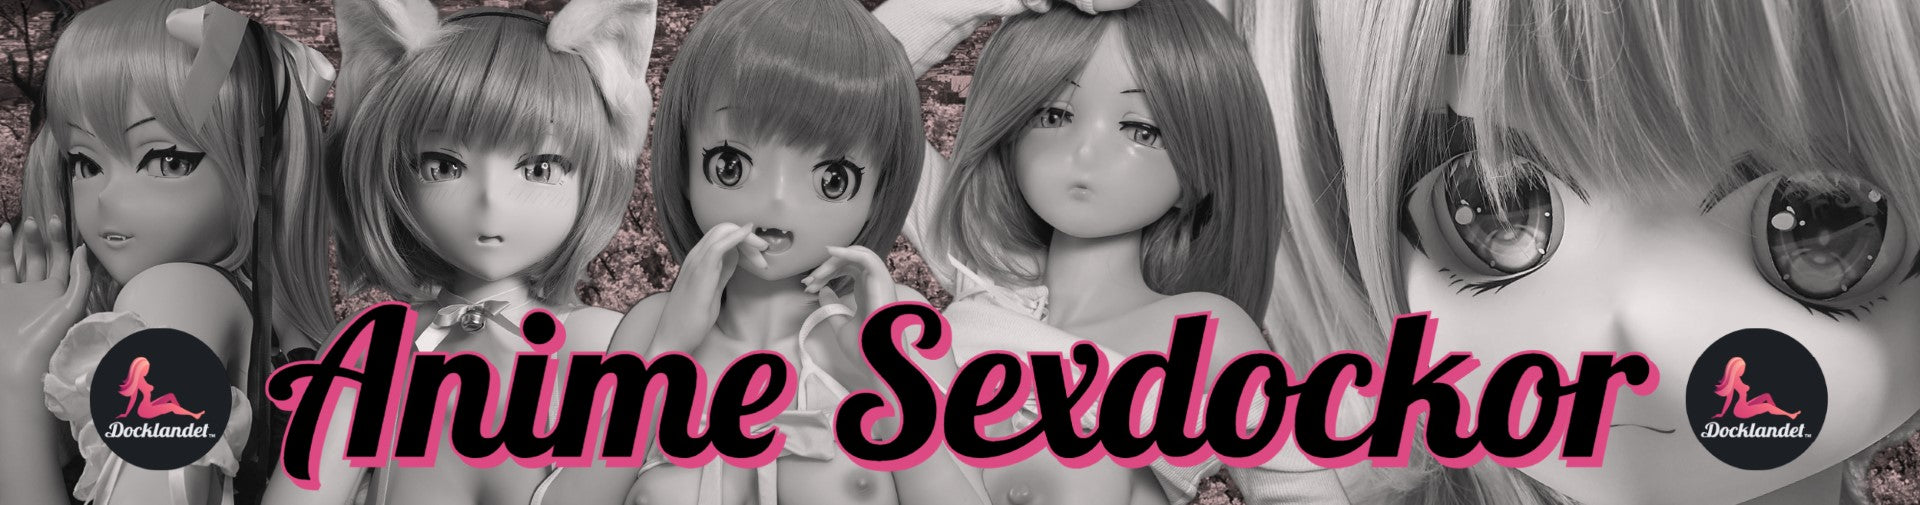 Anime sexdukke